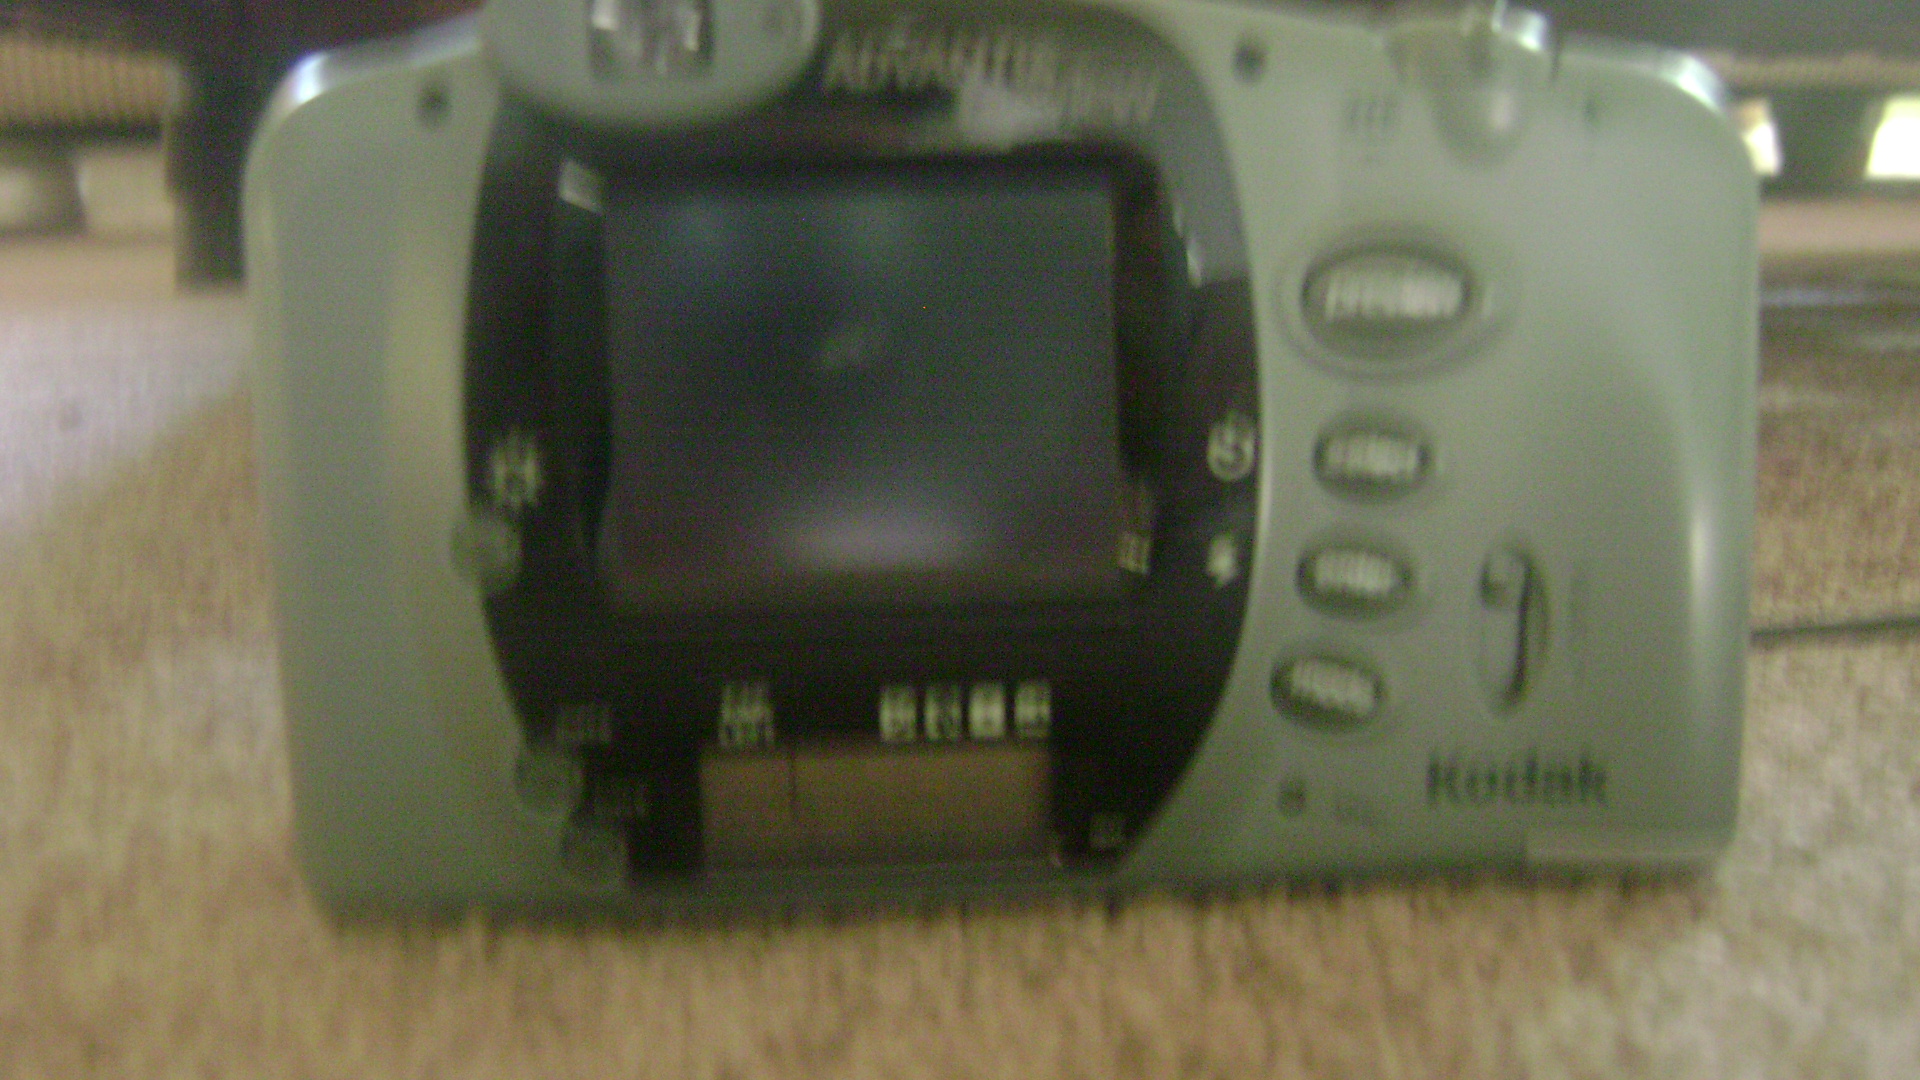 kodak Adventix camera, with photo viewer